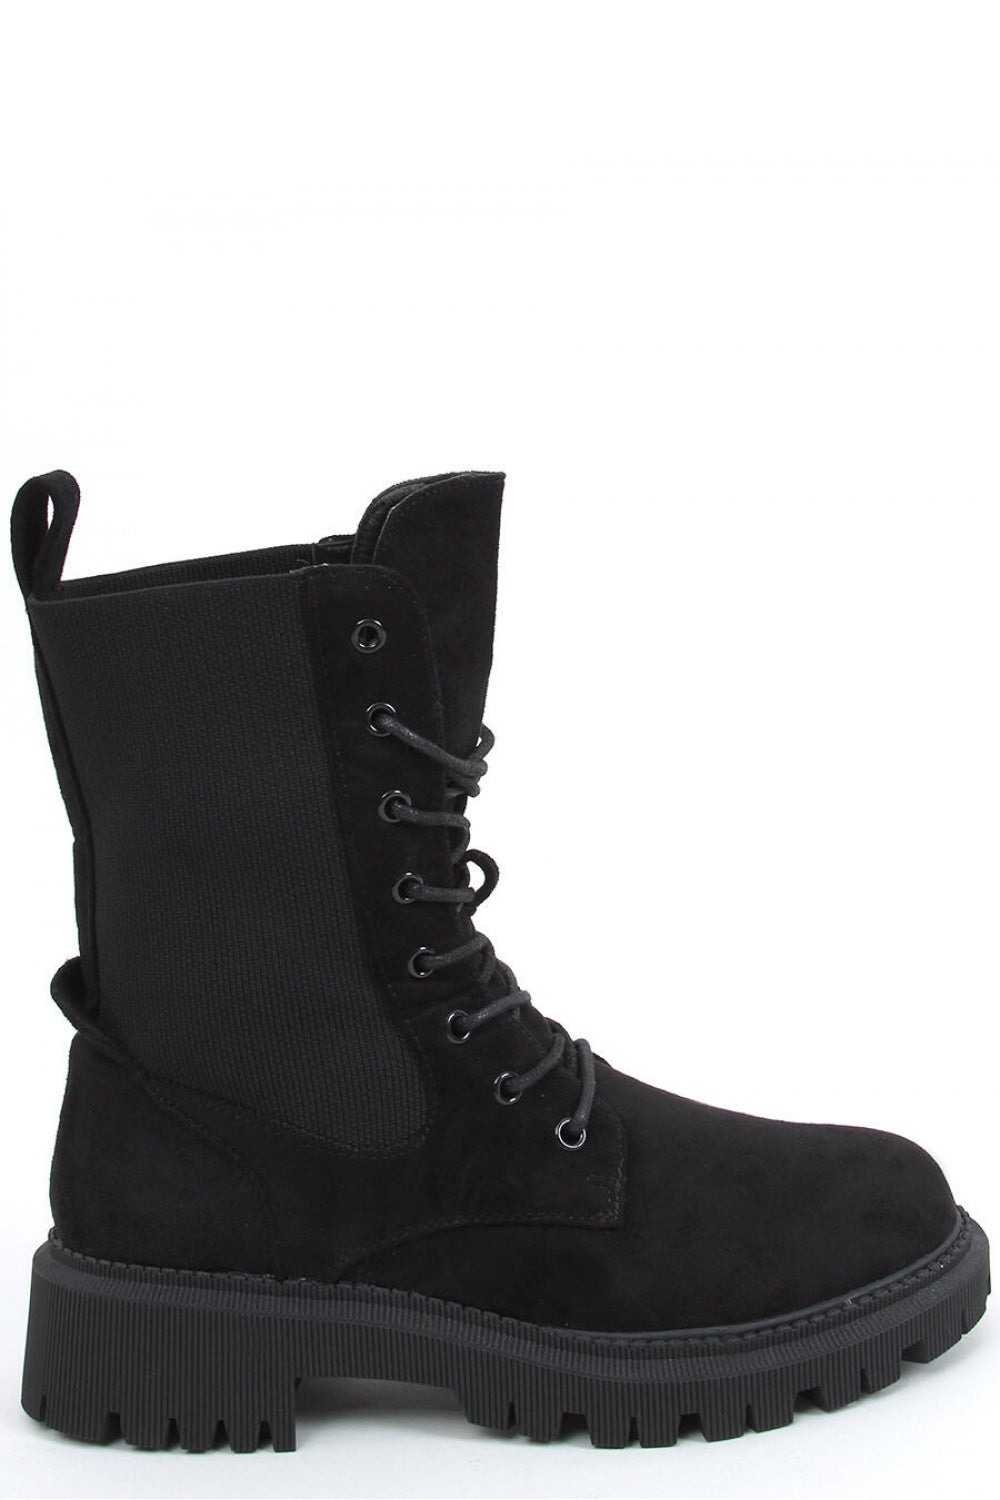 Boots model 159466 Inello Posh Styles Apparel